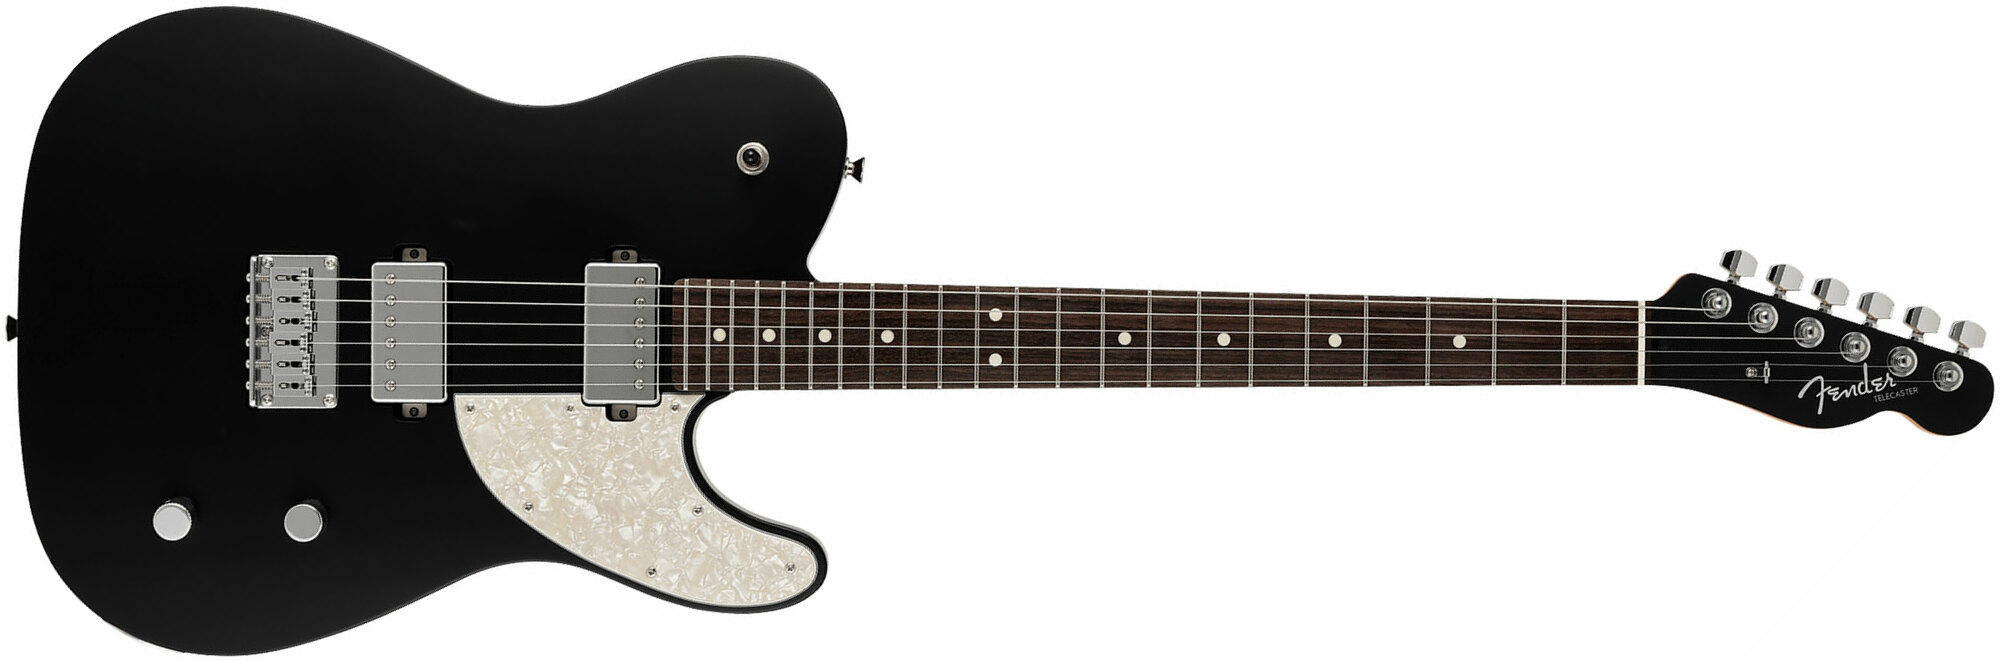 Fender Tele Elemental Mij Jap 2h Ht Rw - Stone Black - Tel shape electric guitar - Main picture